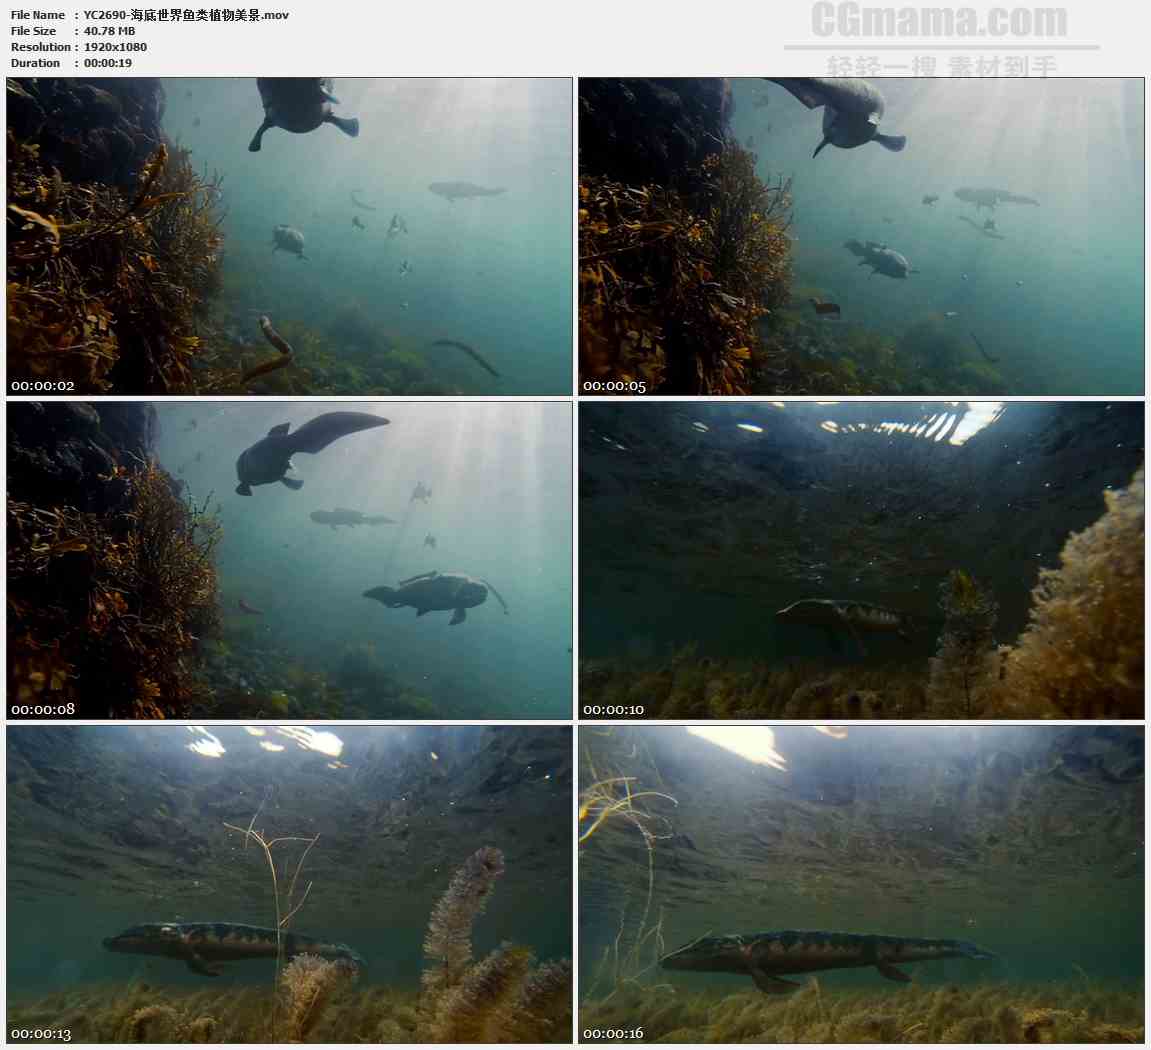 YC2690-海底世界鱼类植物美景高清实拍视频素材